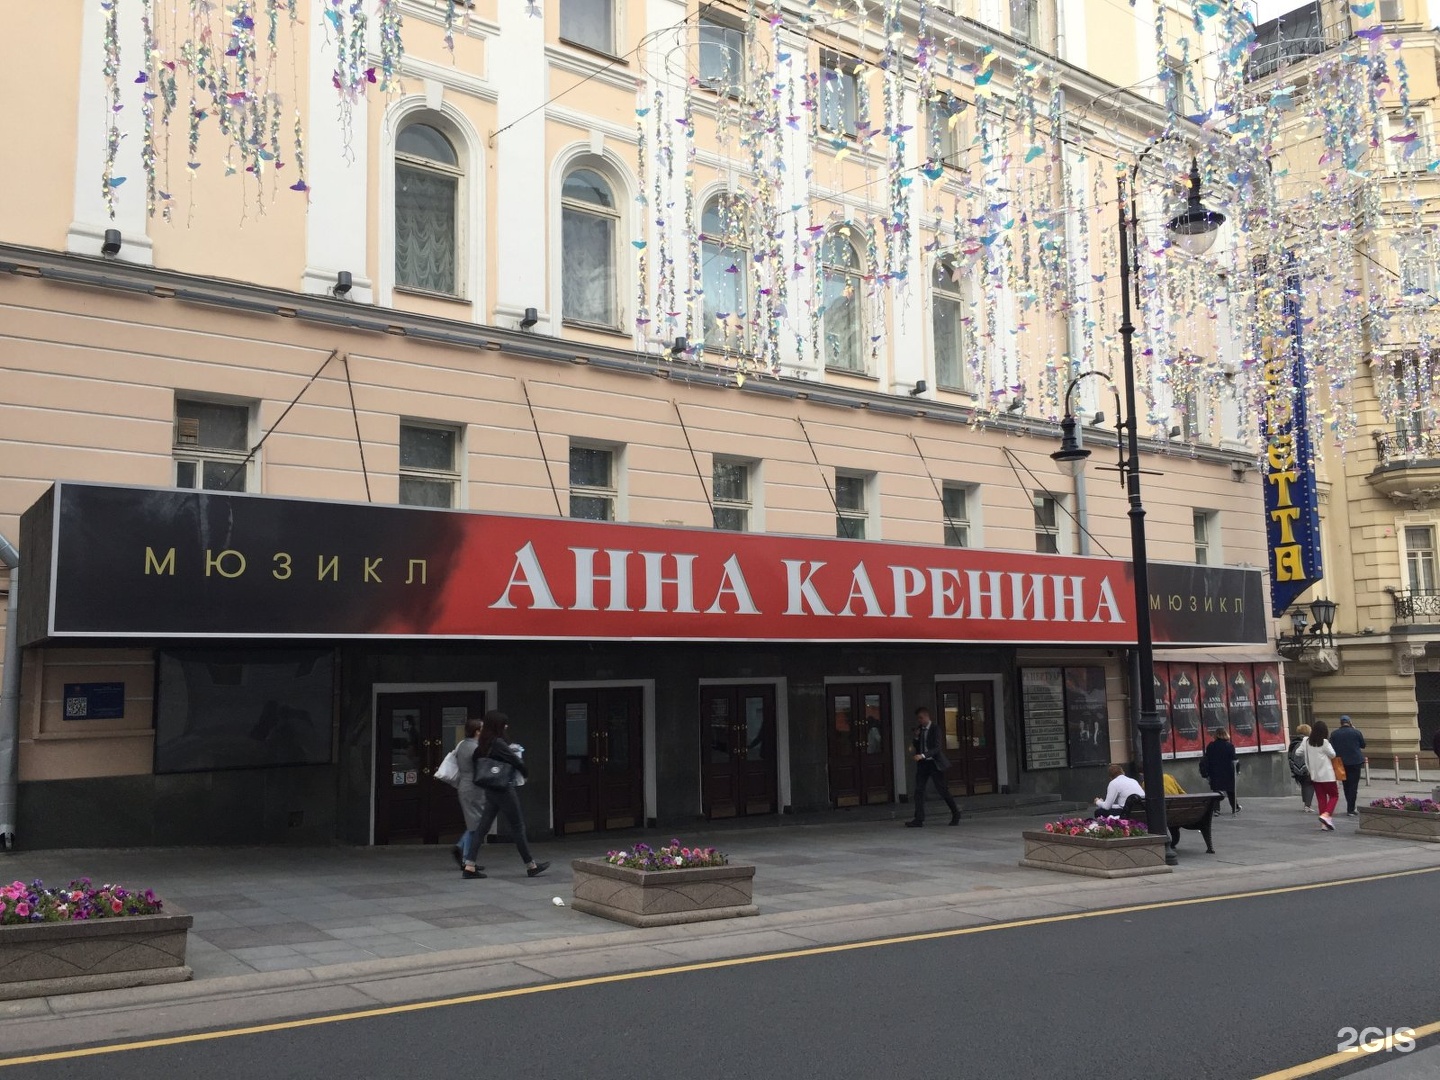 схема зала театра оперетты в москве